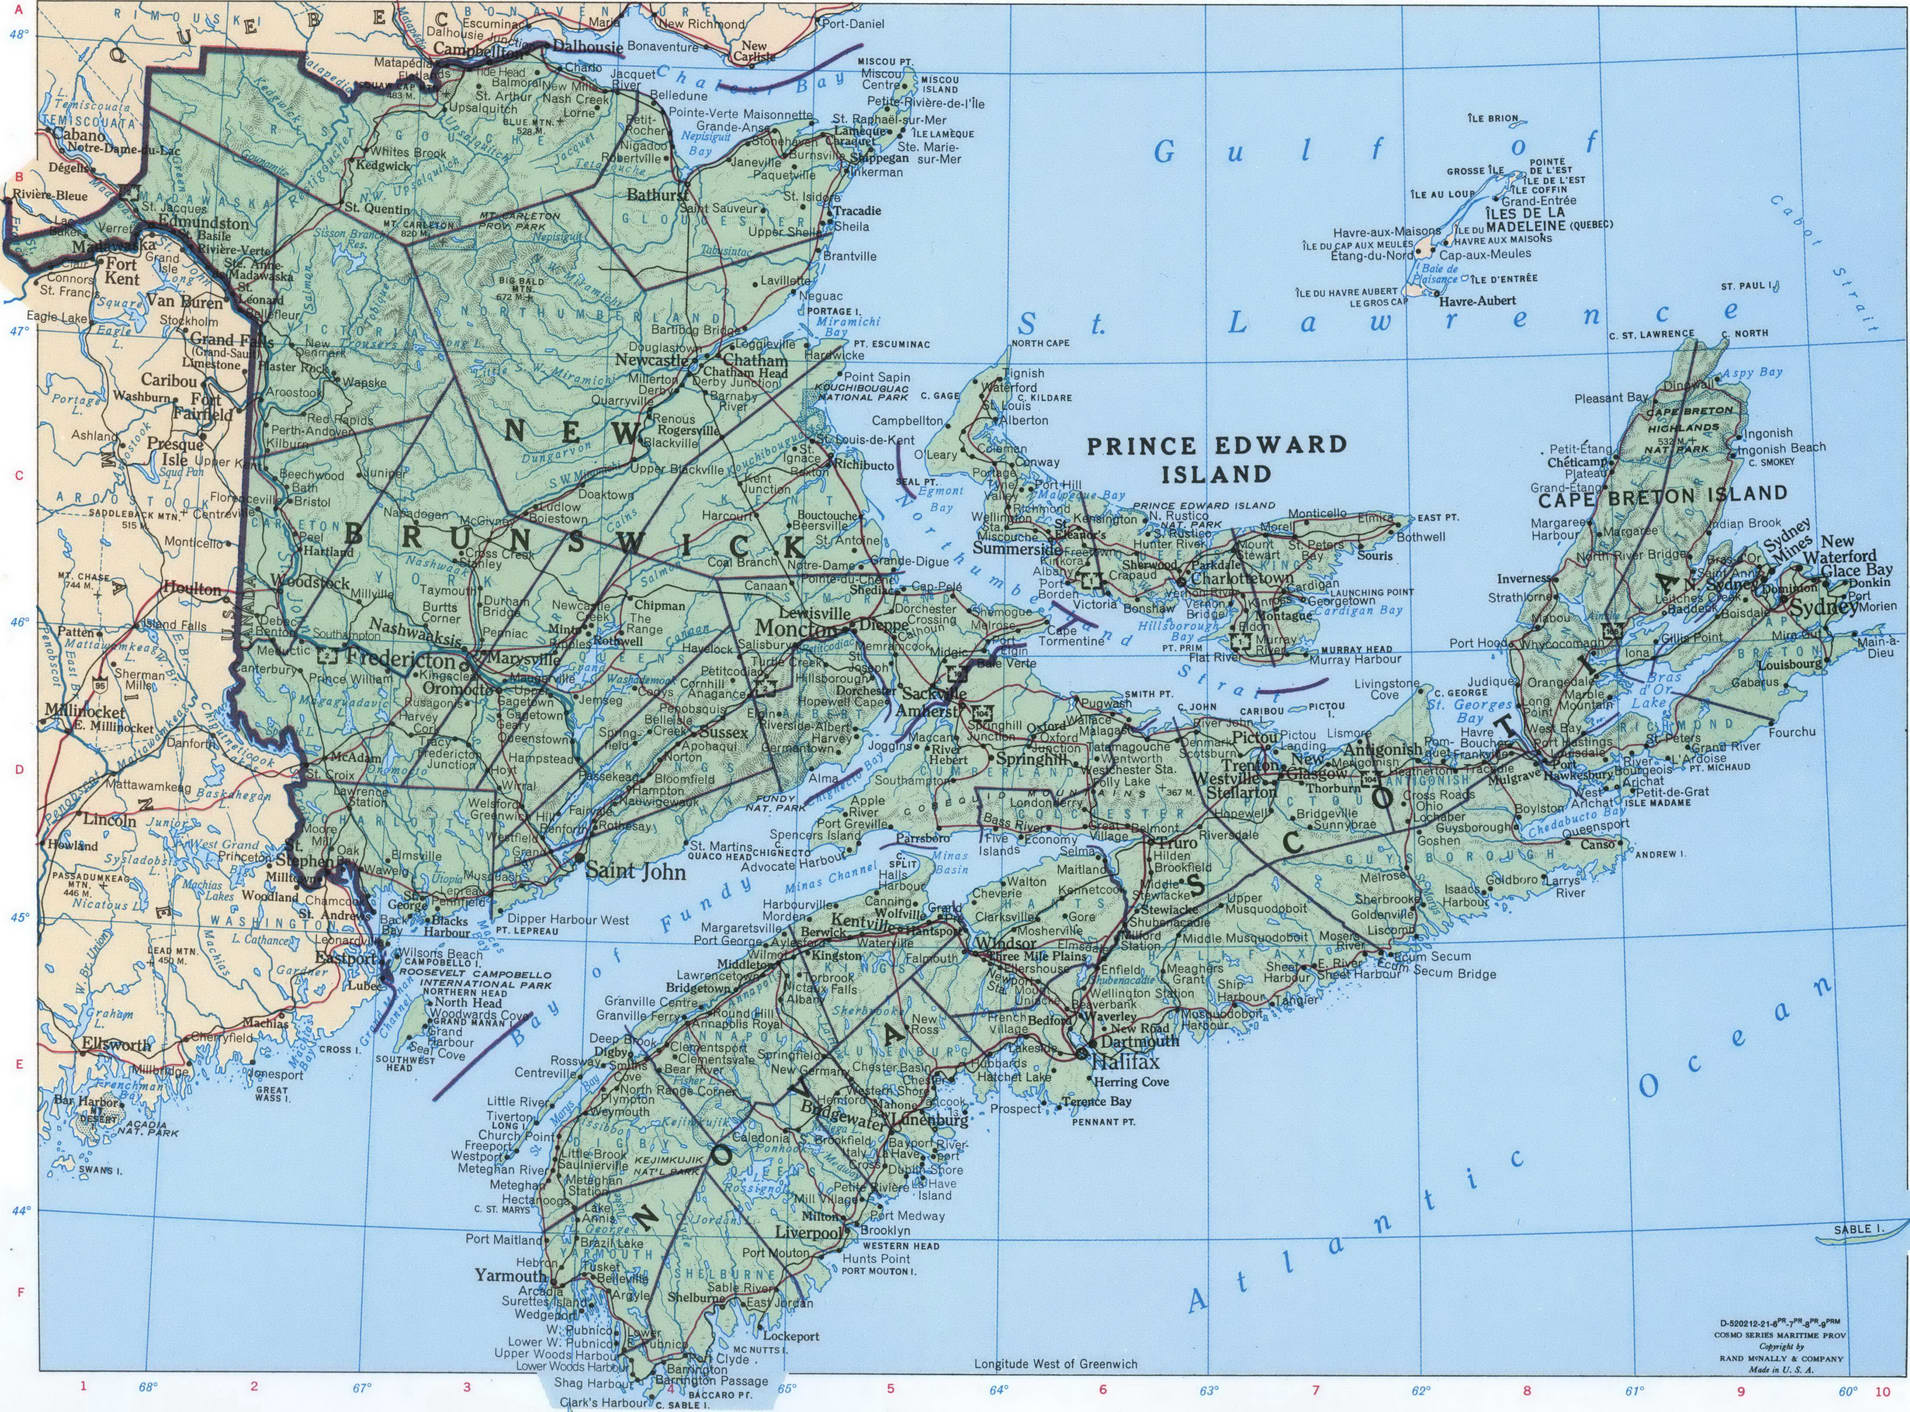 Prince Edward Island geographic map